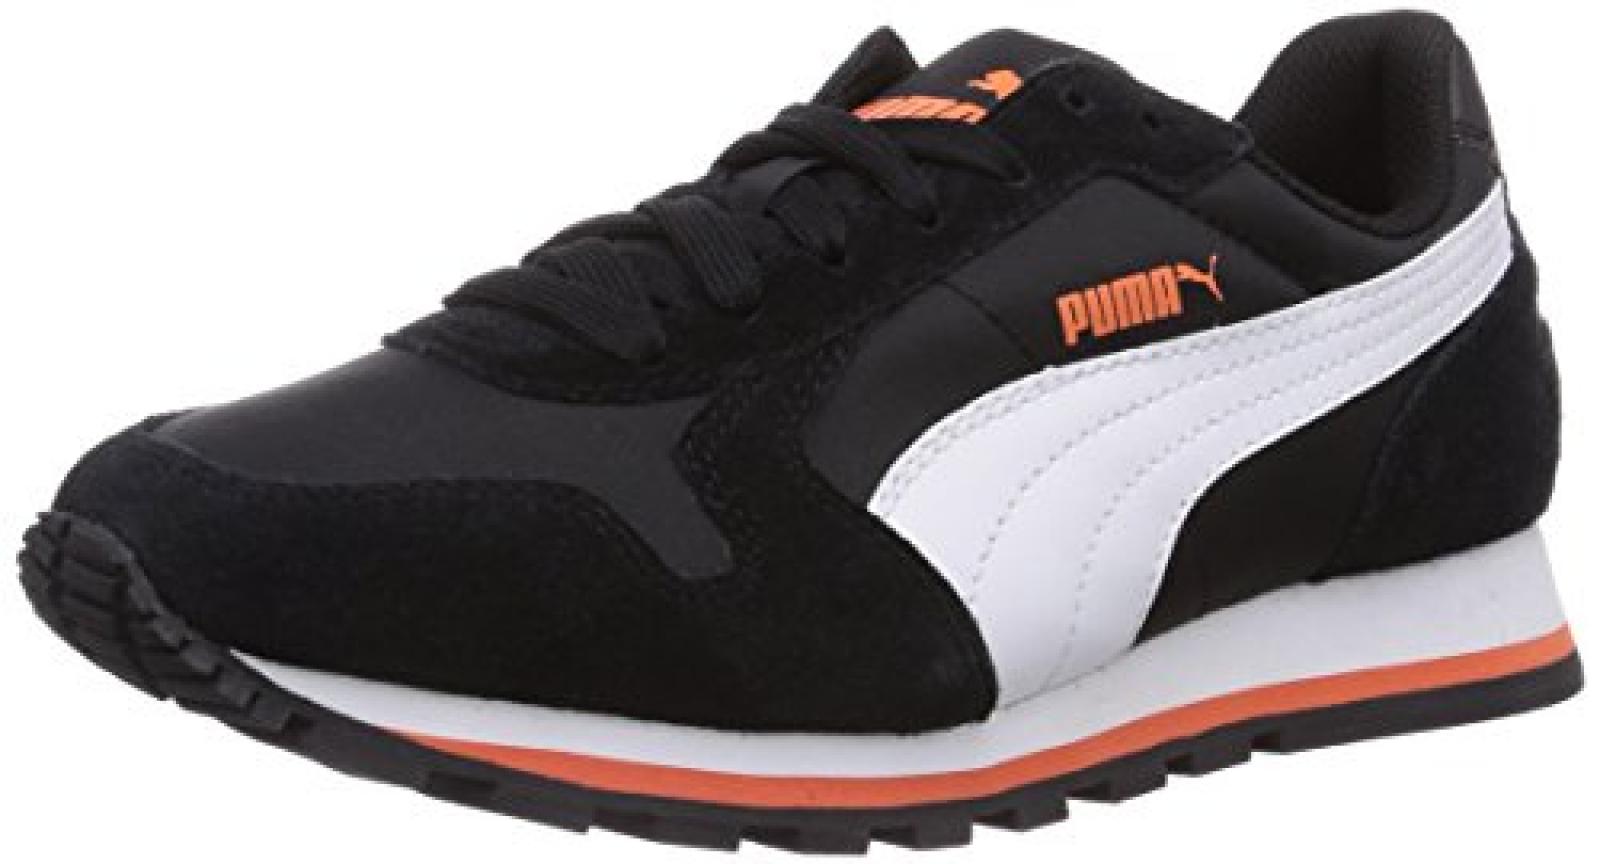 Puma ST Runner NL Unisex-Erwachsene Sneakers 